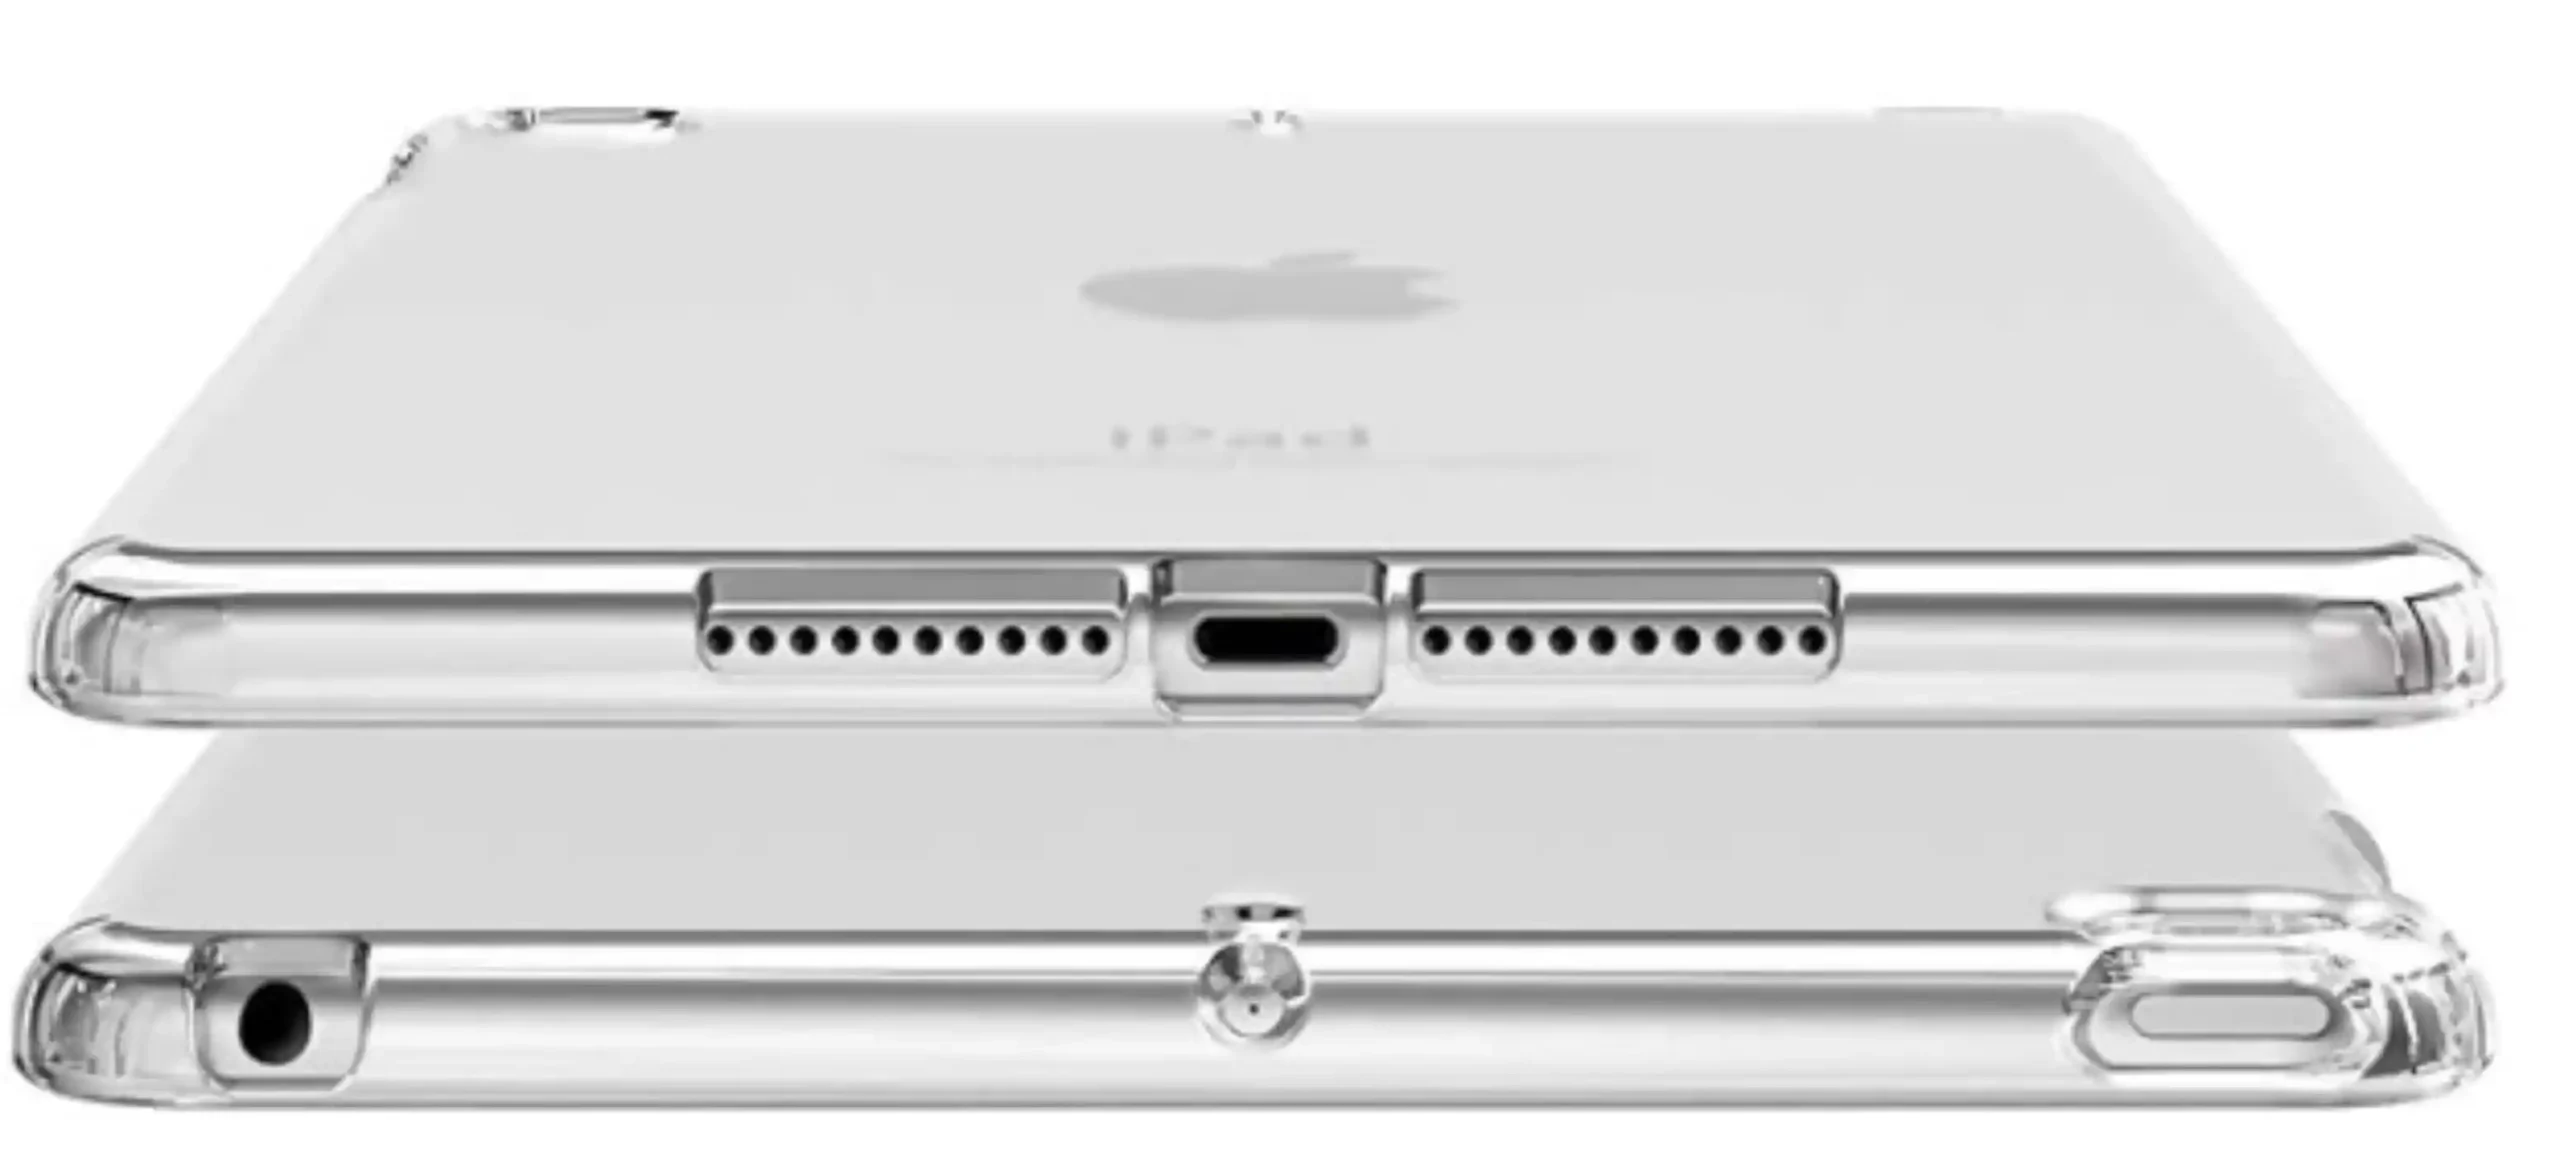 Apple ORIbox iPad 透明保护壳在美国亚马逊官网仅售6.84美元